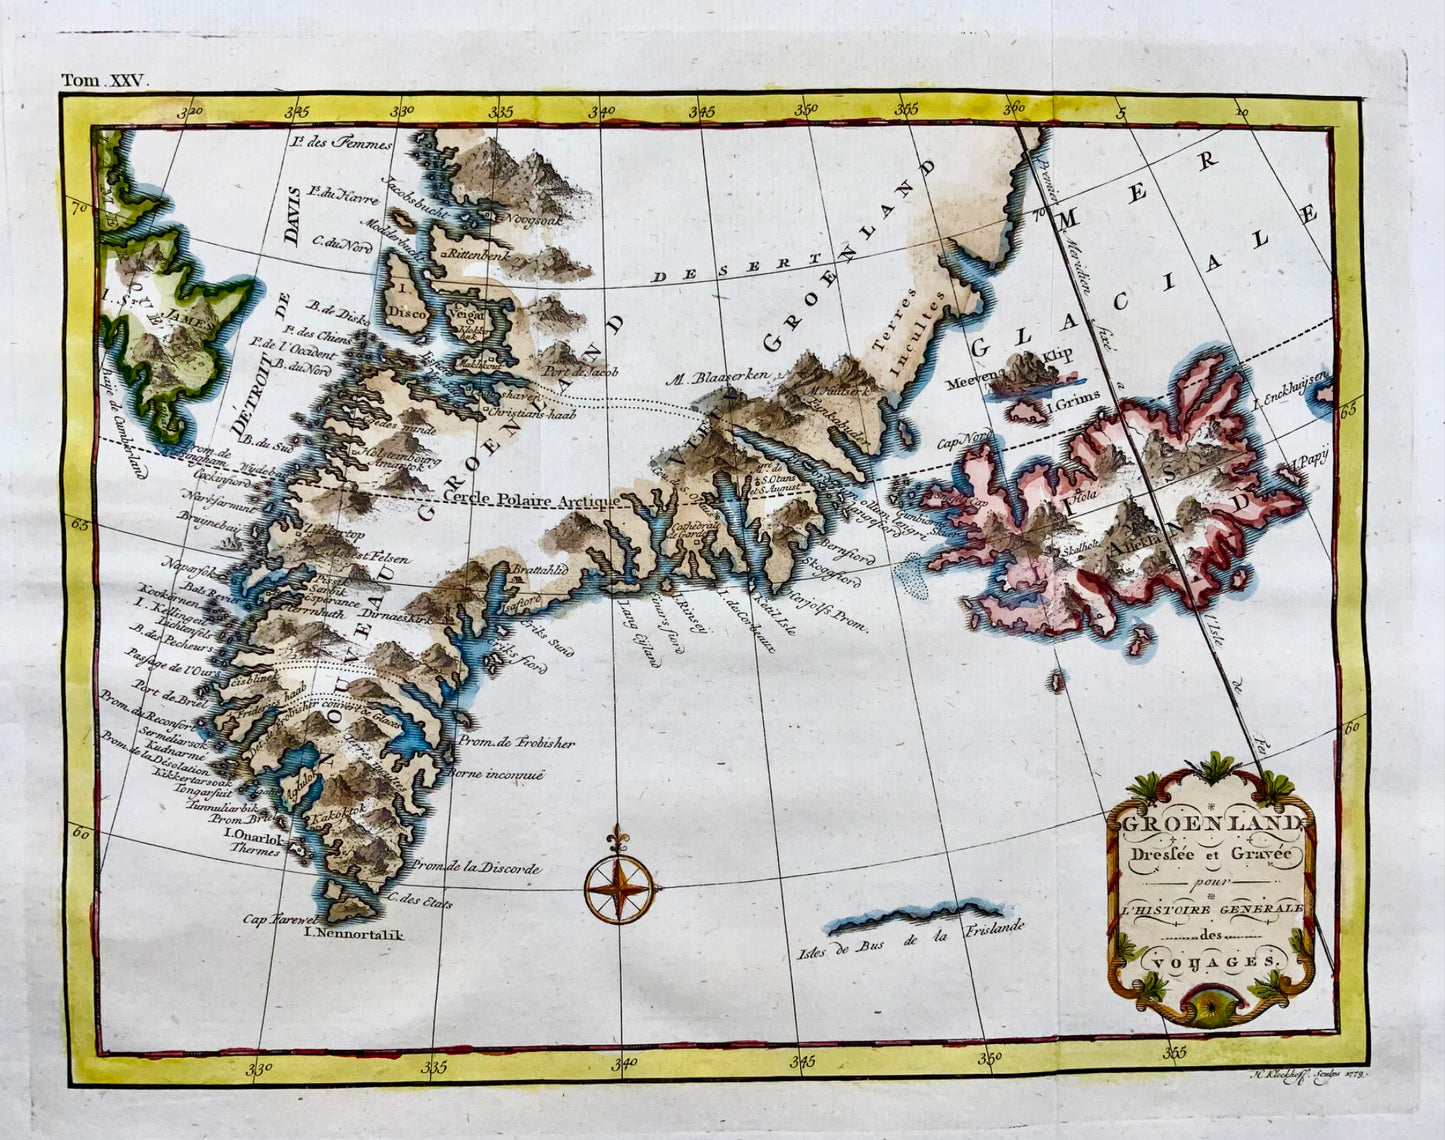 1779 H. Klockhoff, Greenland, Groenland, Iceland, Arctic, hand coloured map, travel